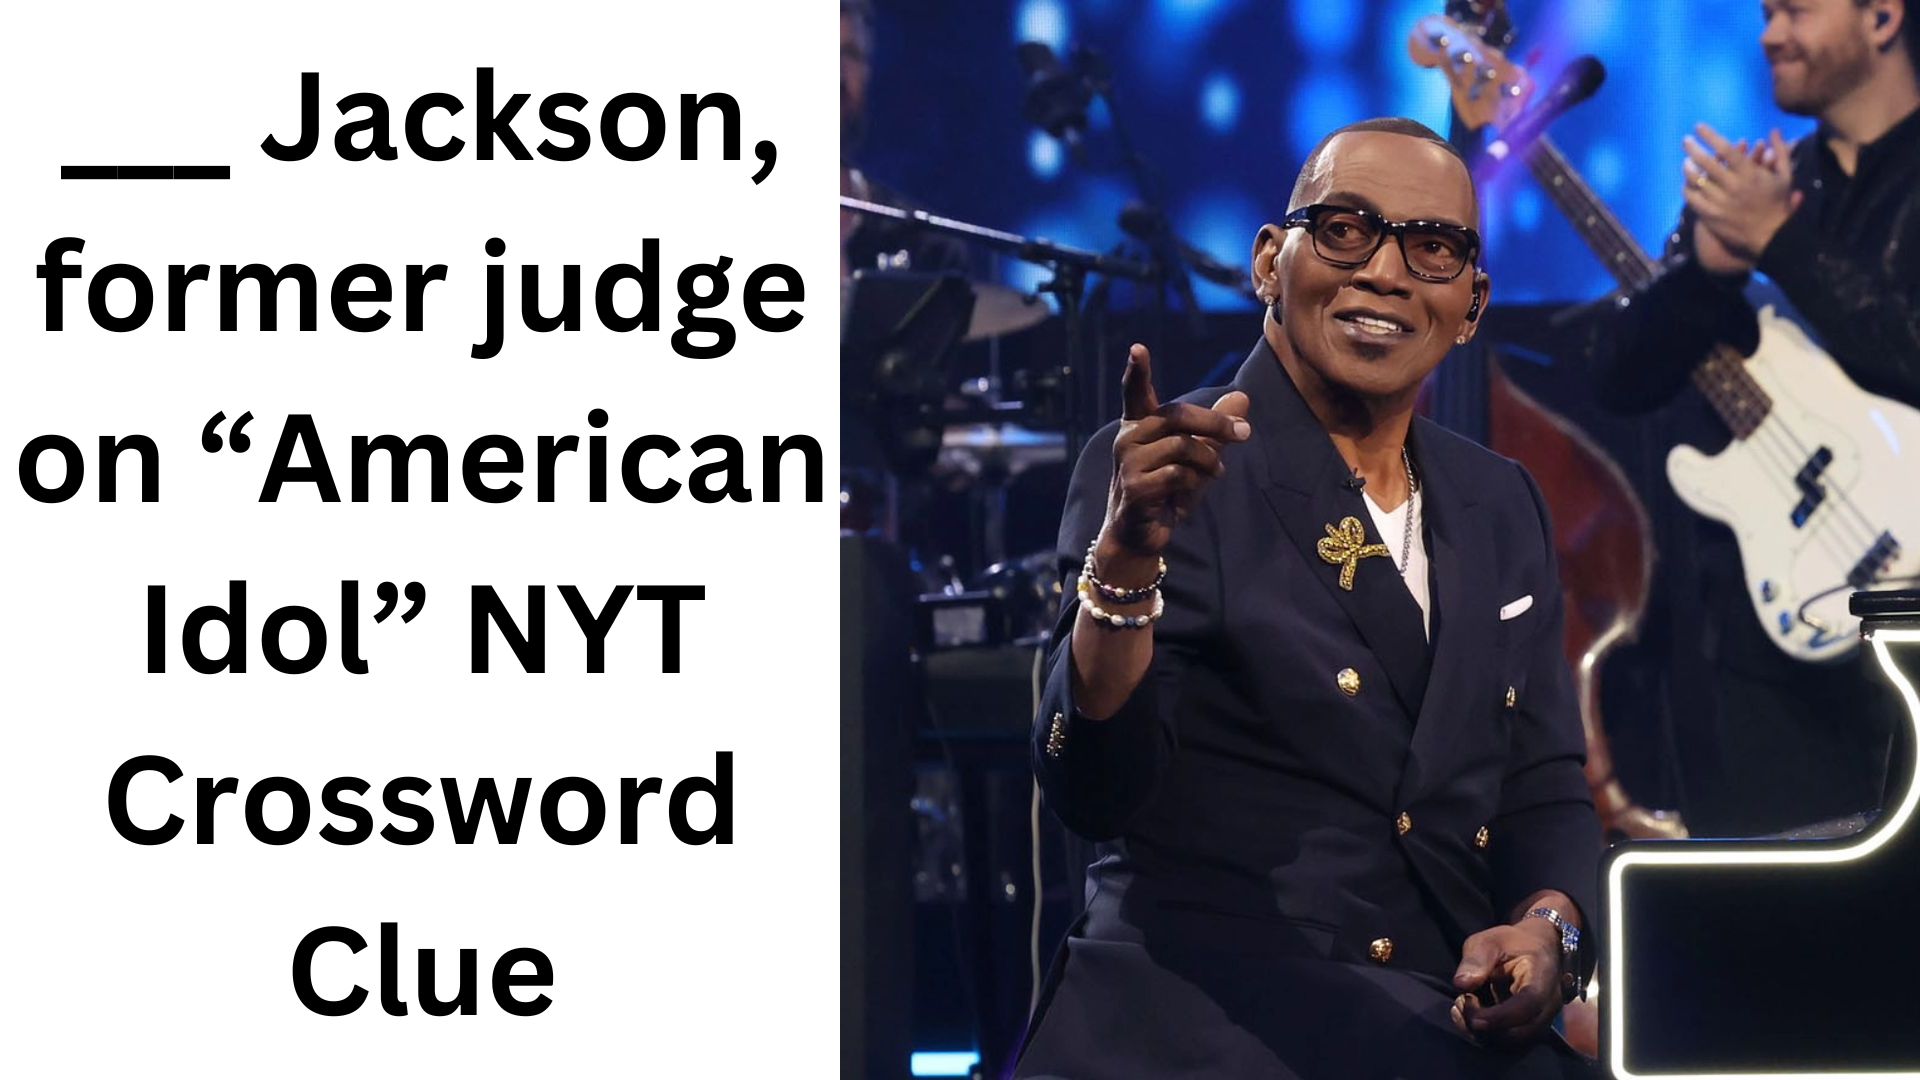 ___ Jackson, former judge on “American Idol” NYT Crossword Clue